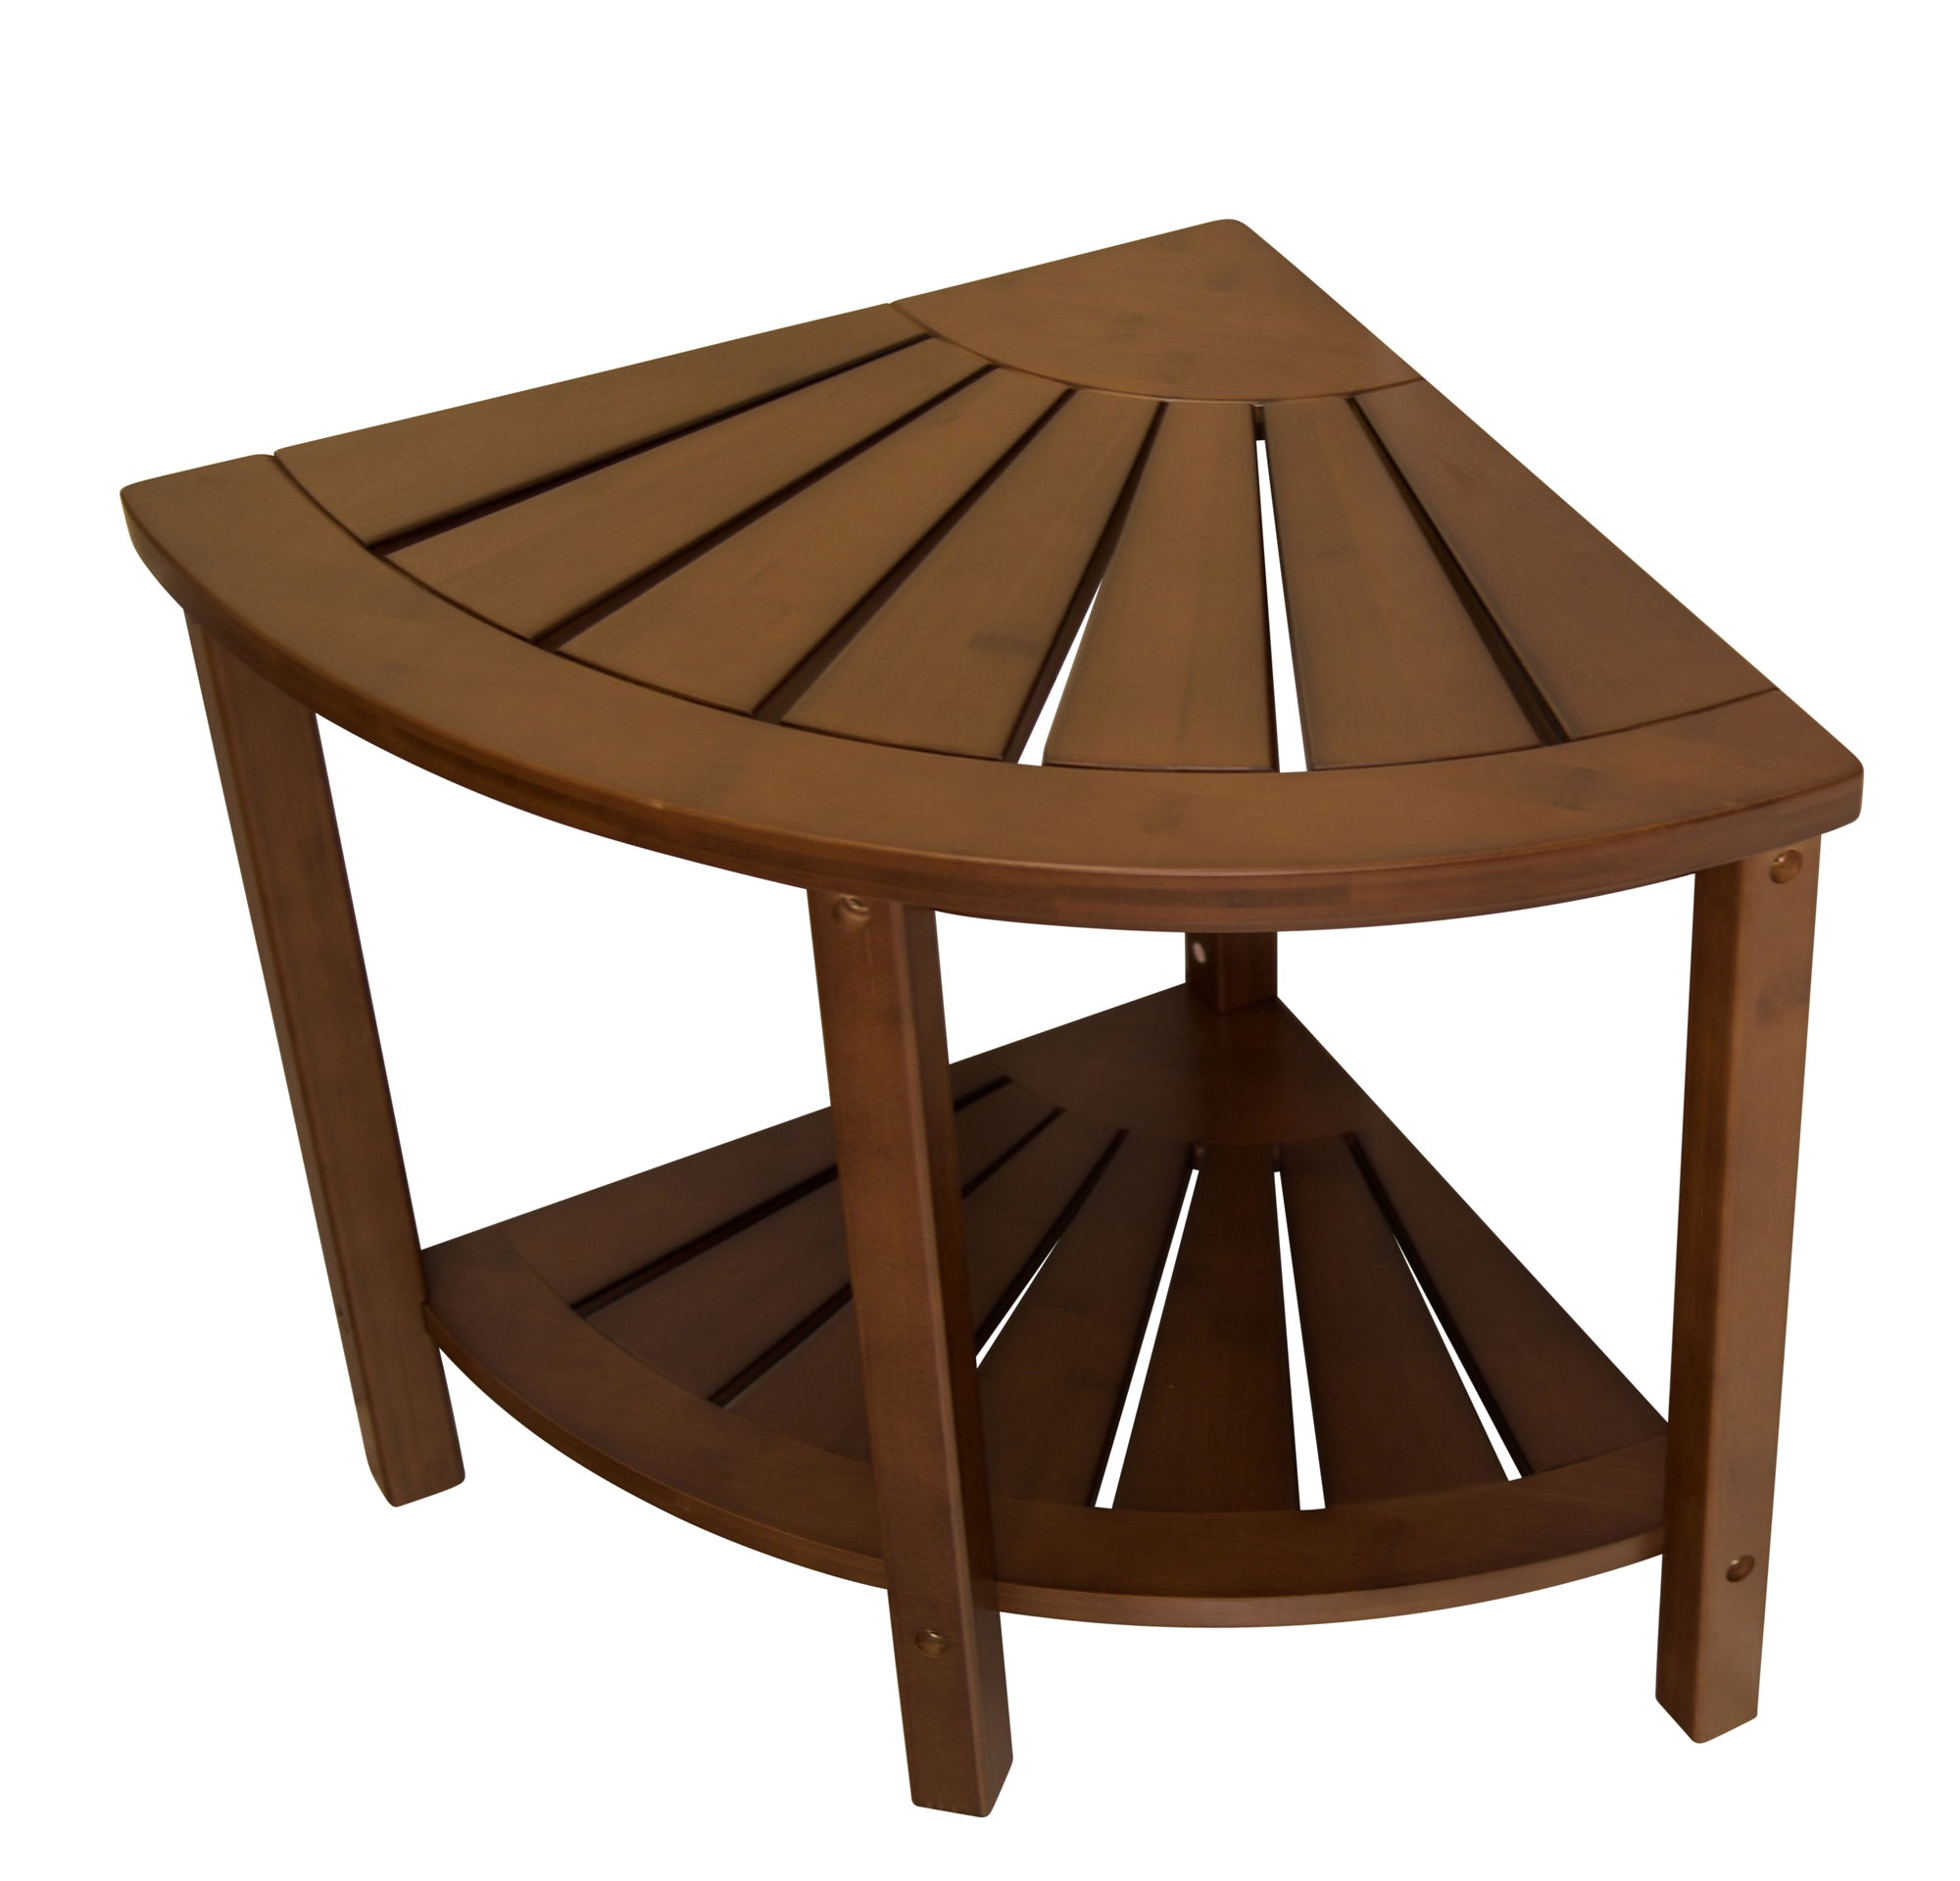 Eccostyle Solid Bamboo Spa Style Corner Bench - Caramel